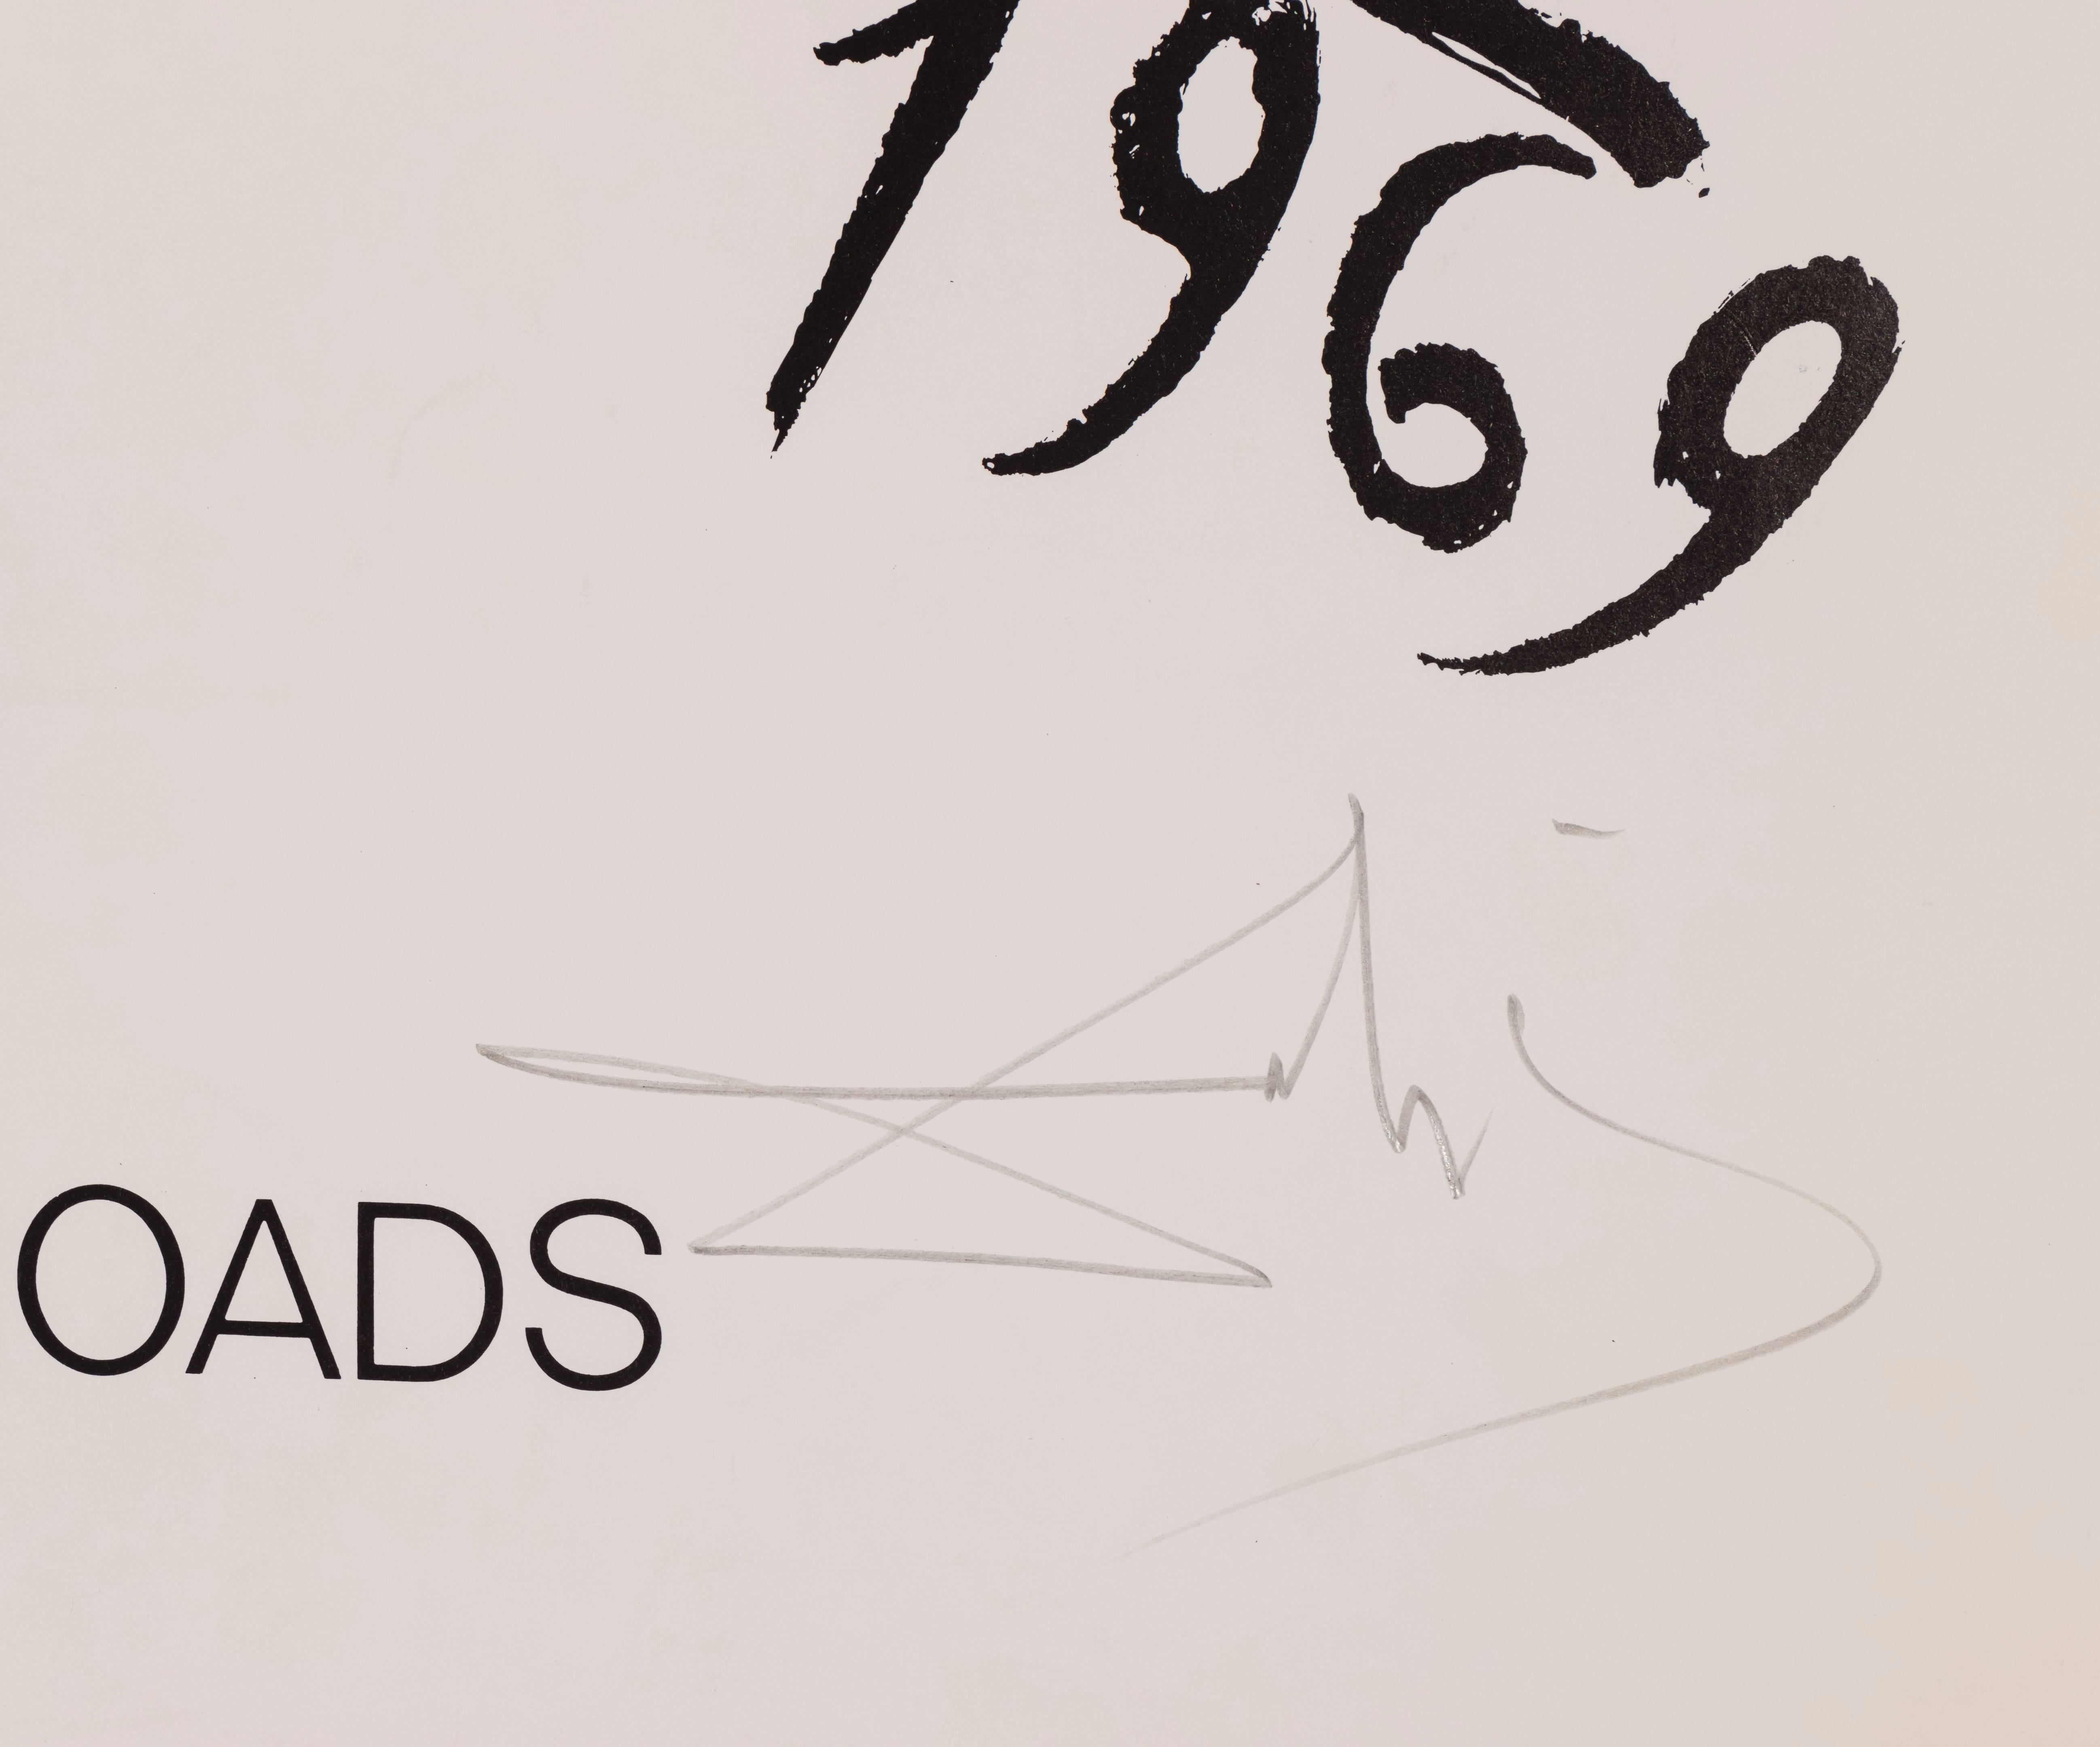 Alpes FRENCH NATIONAL RAILROADS - Print by Salvador Dalí